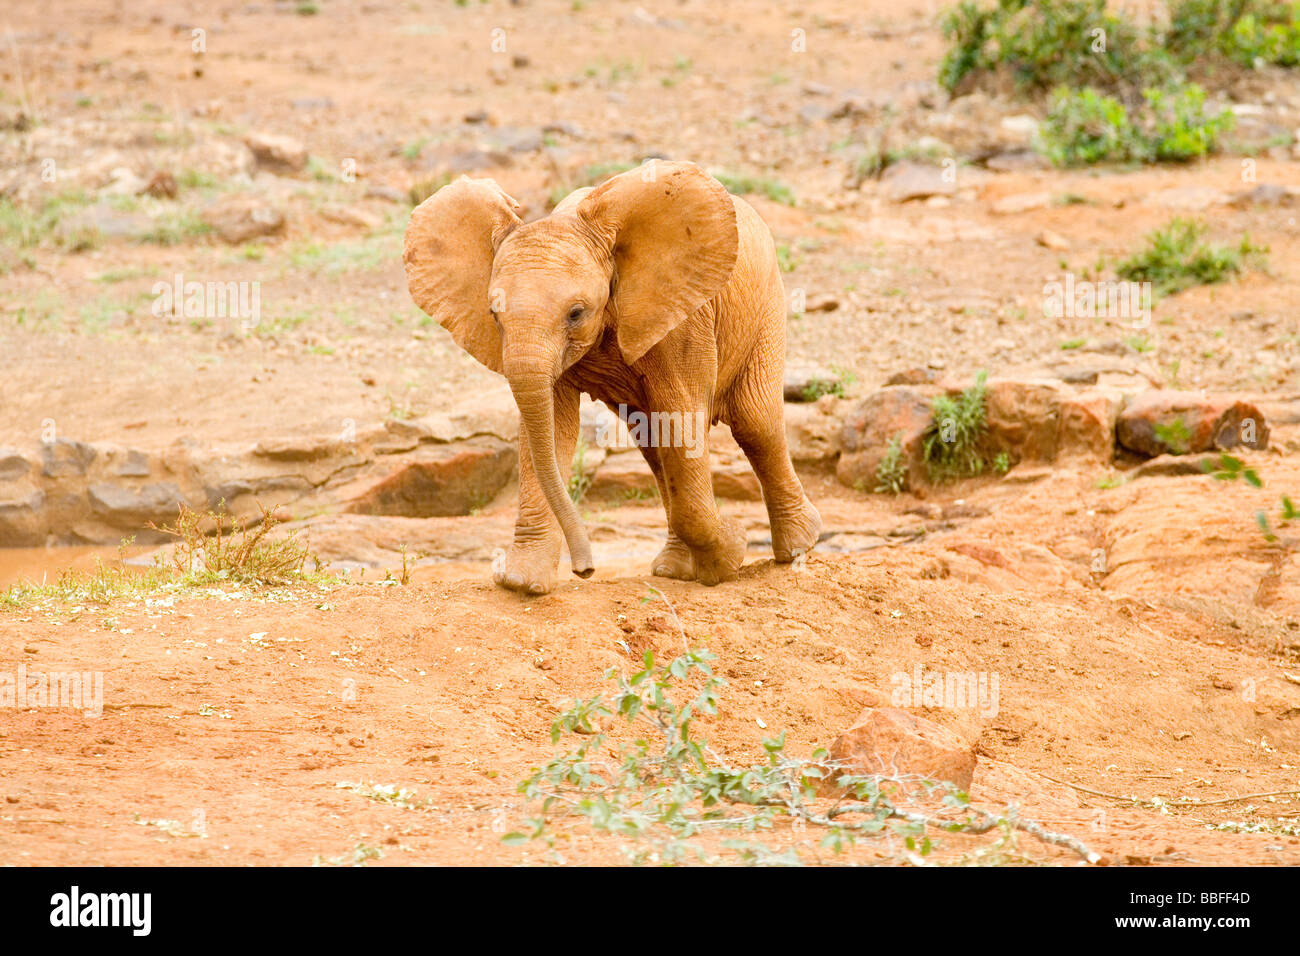 Young orphan baby elephant at David Sheldrick Wildlife Trust sanctuary in Nairobi Kenya East Africa mammal animal fauna nature n Stock Photo